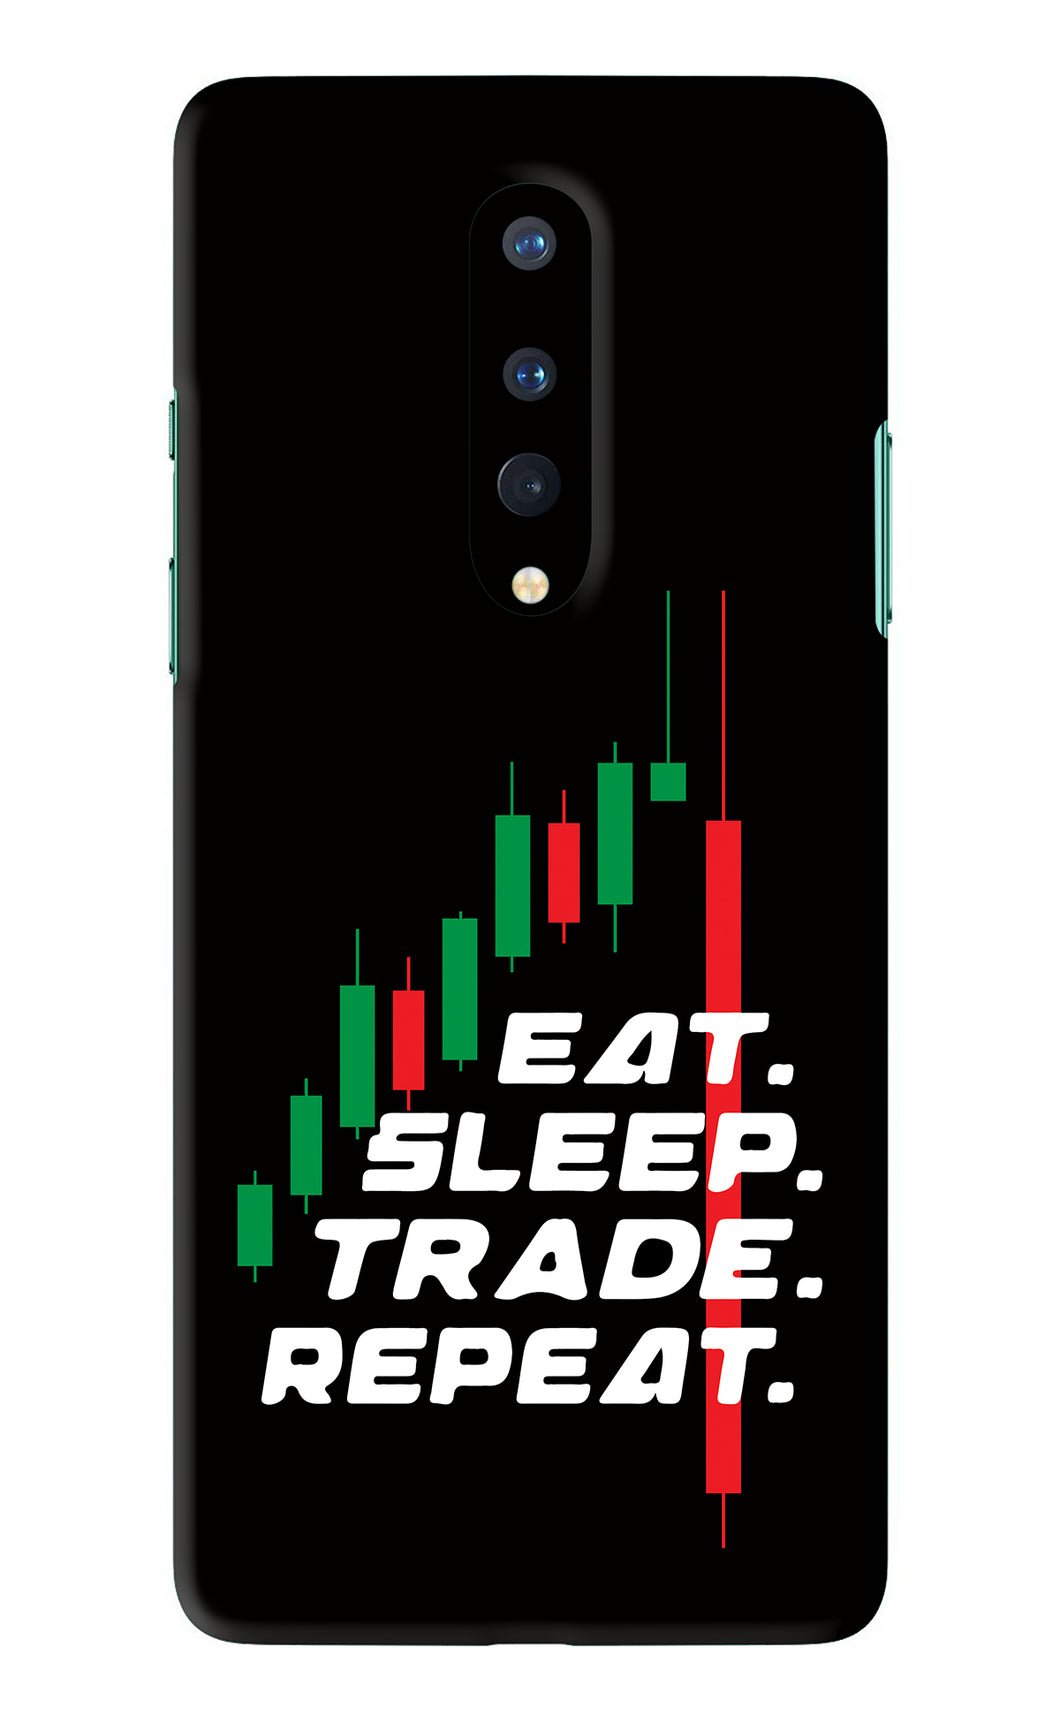 Eat Sleep Trade Repeat OnePlus 8 Back Skin Wrap